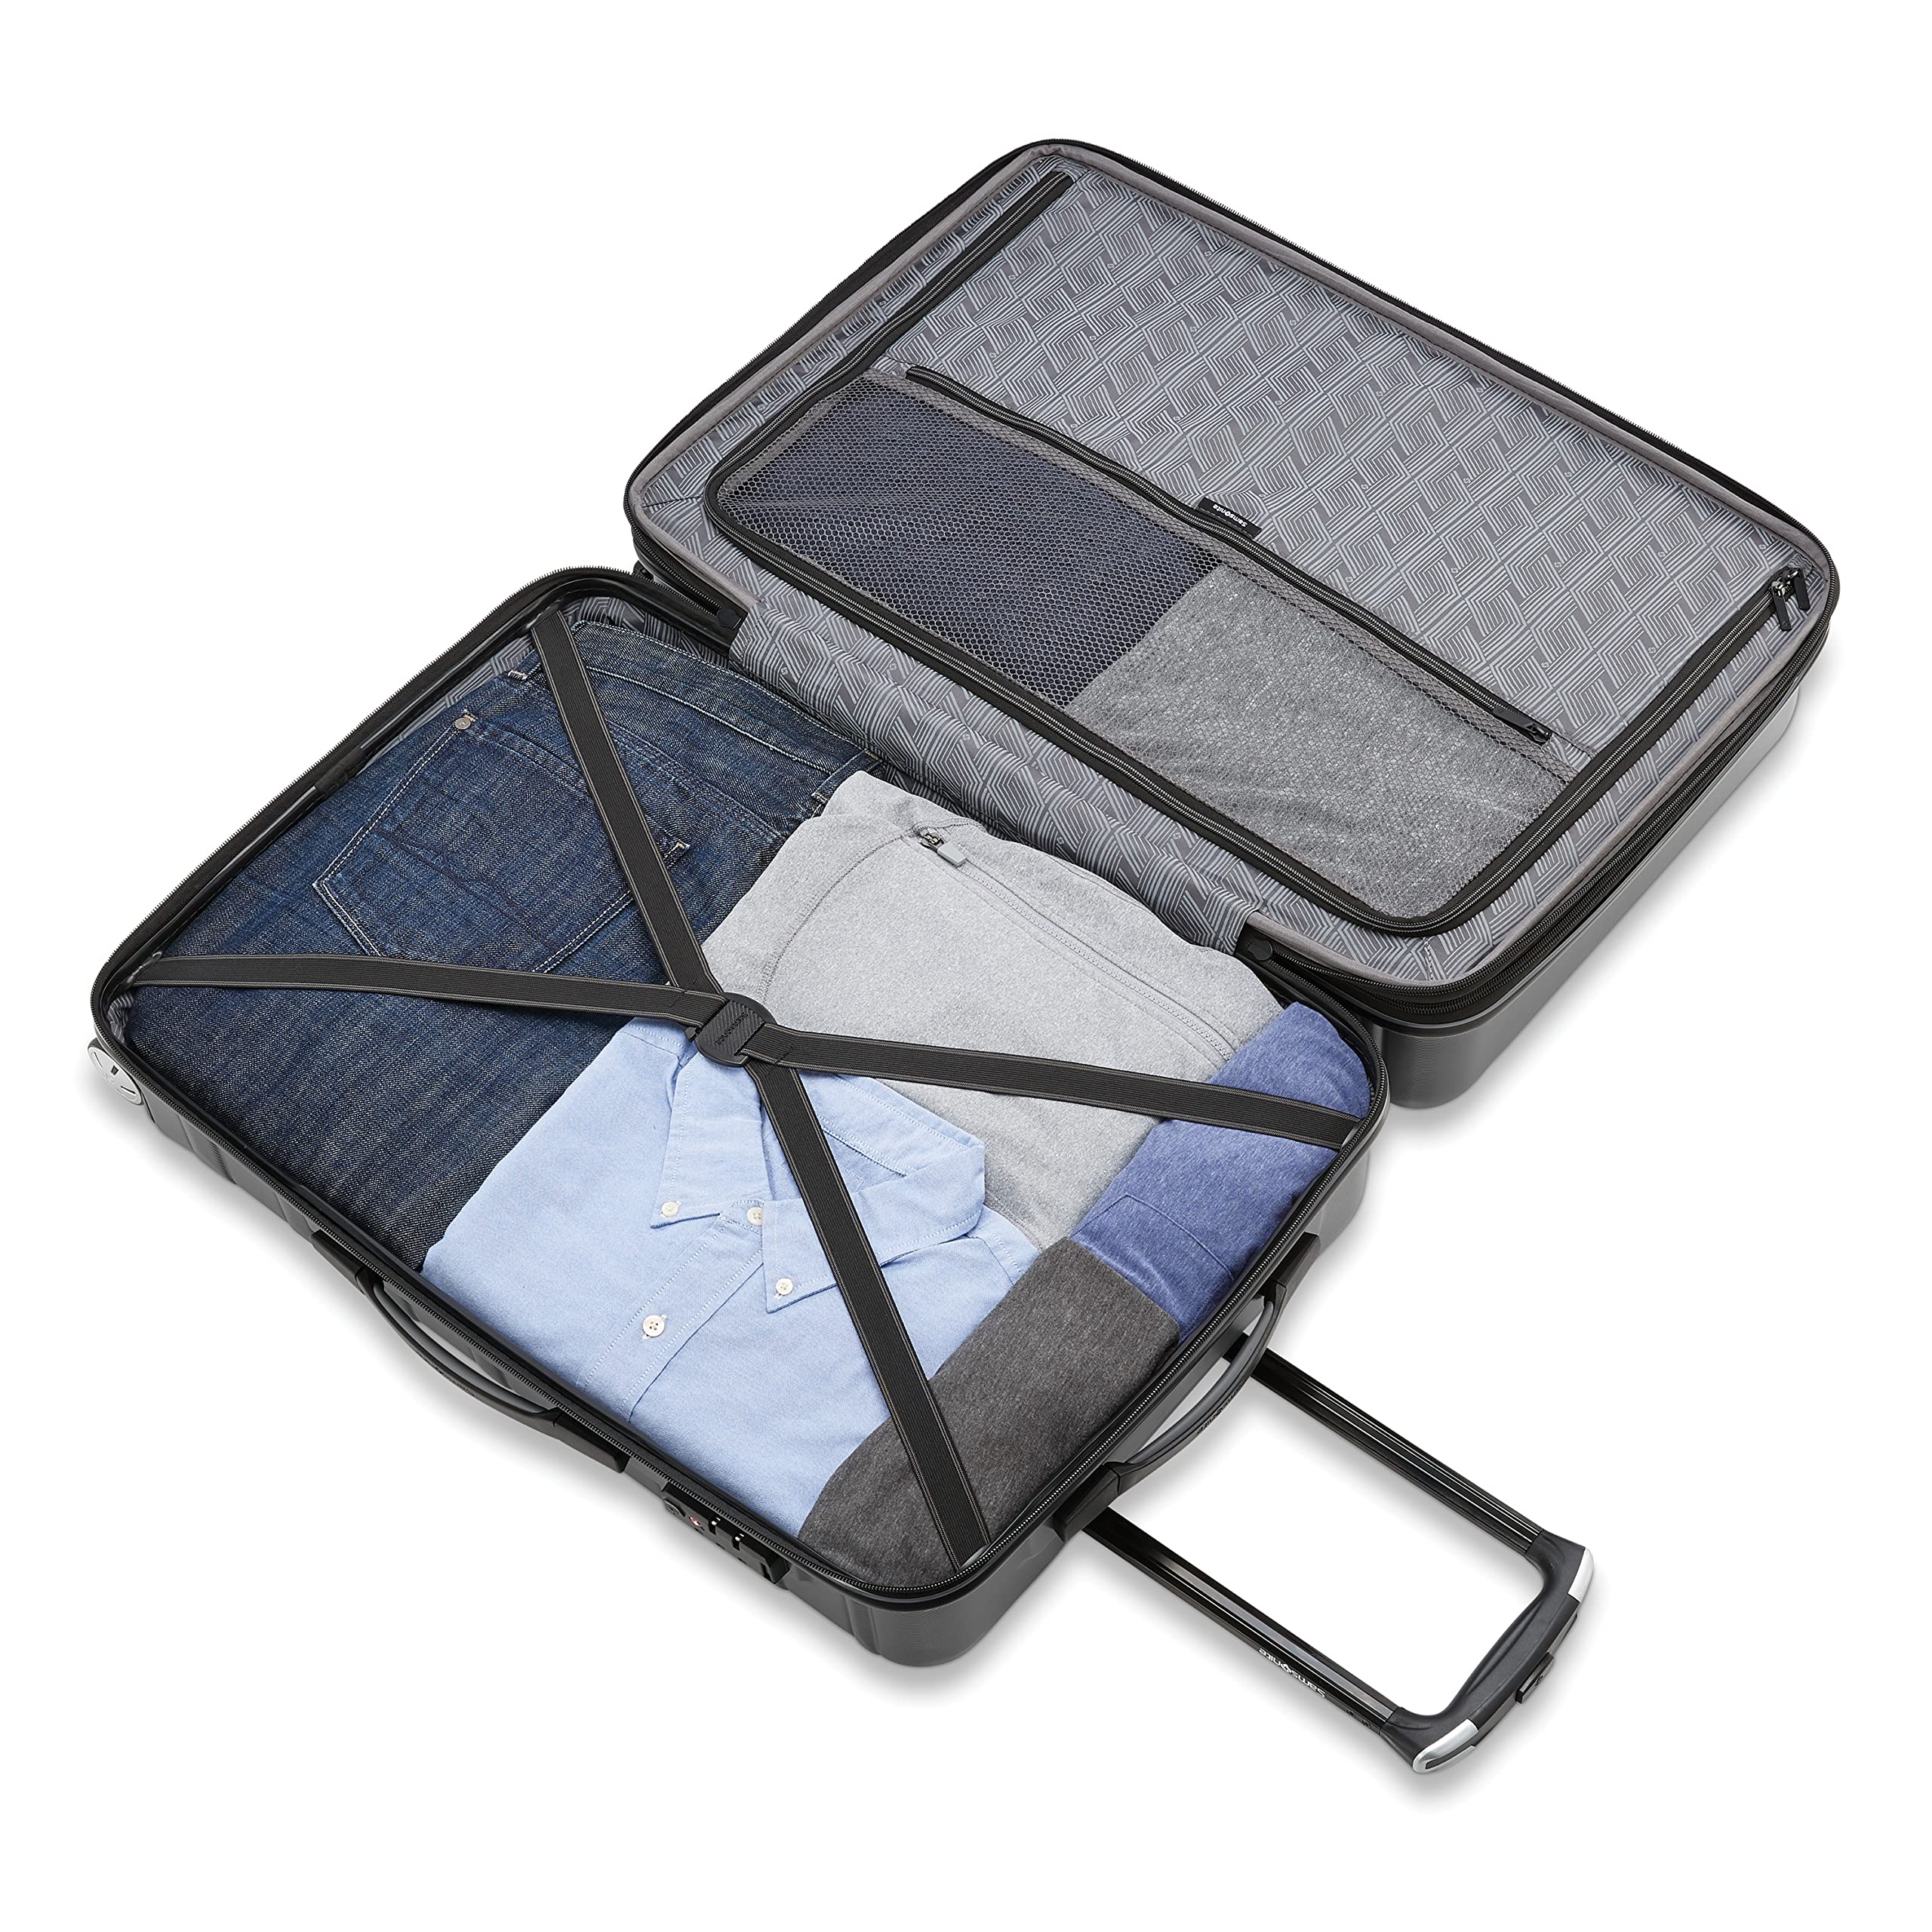 Samsonite Omni 2 Hardside Expandable Luggage with Spinners | Charcoal | Medium